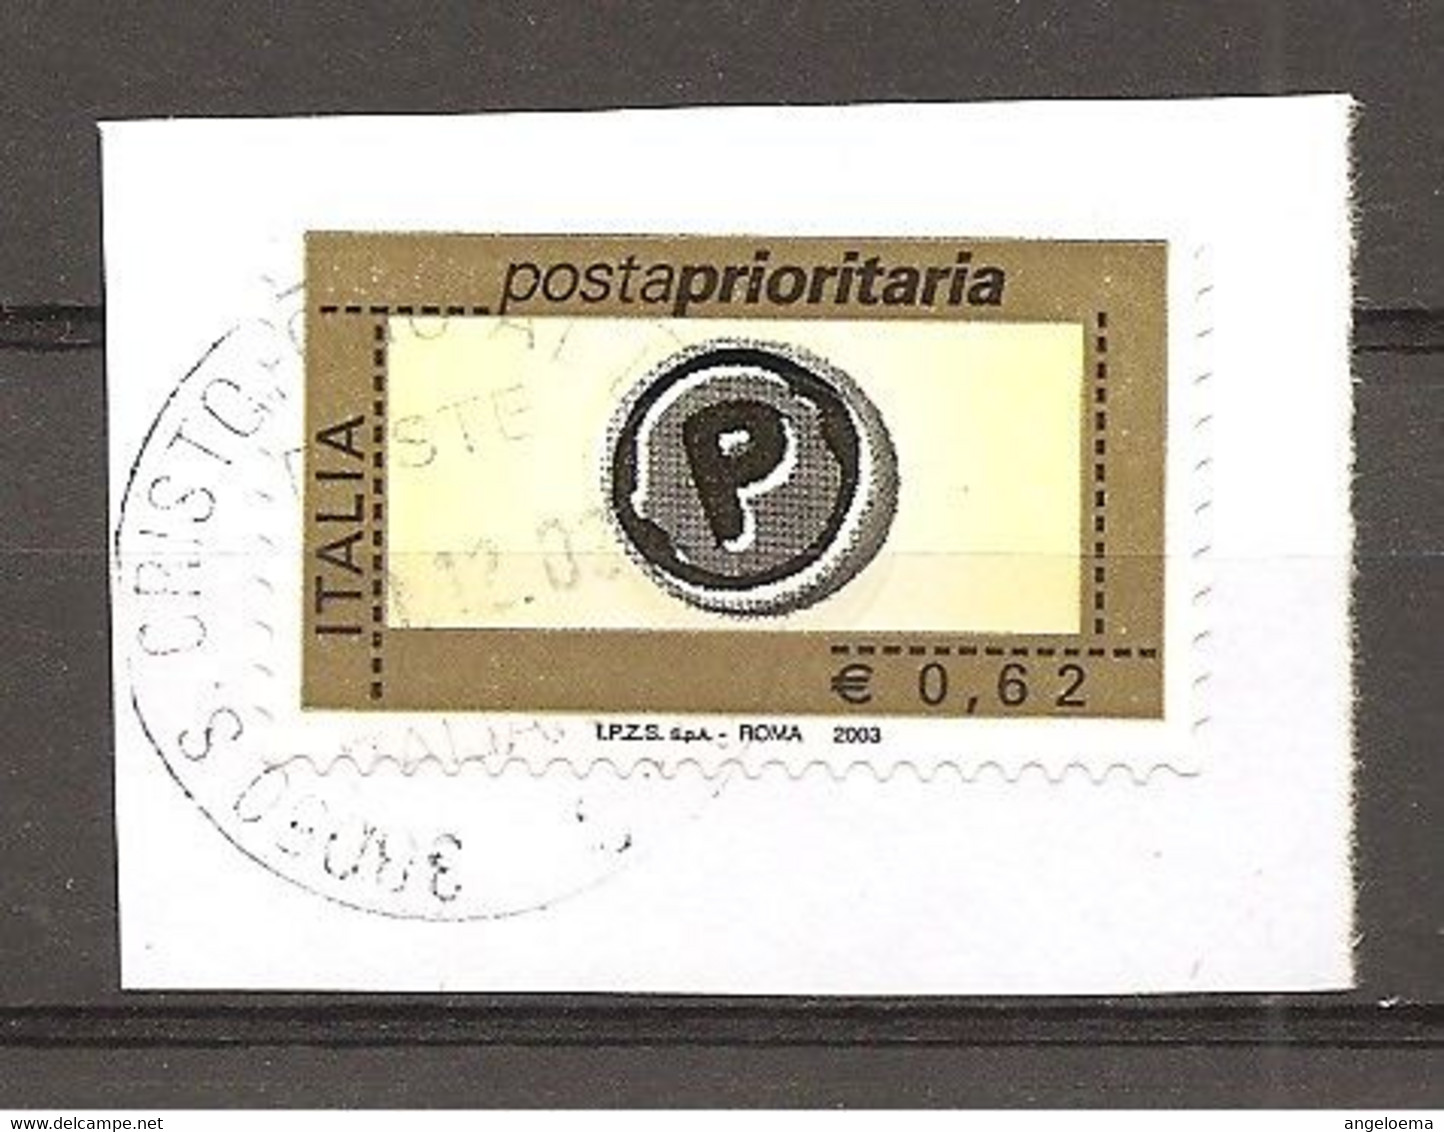 ITALIA - 2003 POSTA PRIORITARIA €0,62 Con Dicitura IPZS SpA ROMA 2003  Usato - 2001-10: Usados